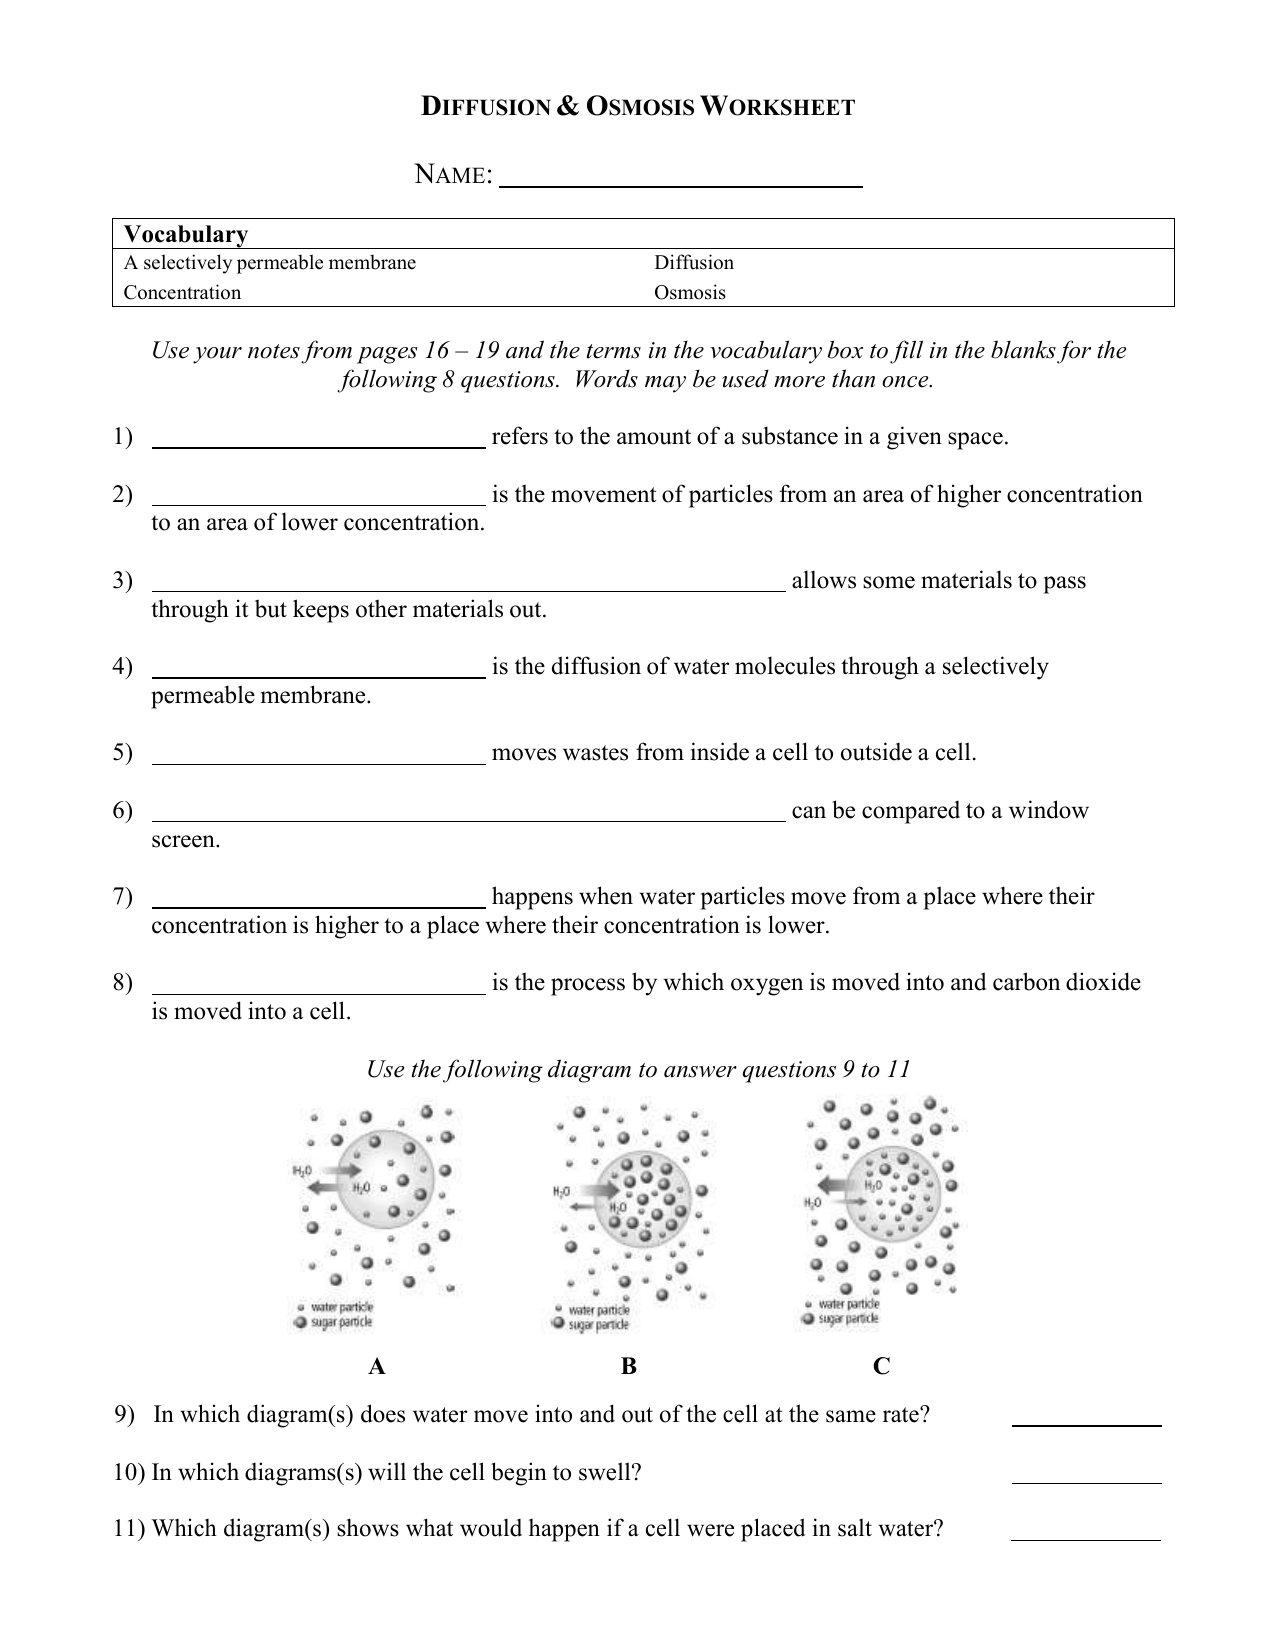 Diffusion-Osmosis-Worksheet 11 With Regard To Diffusion And Osmosis Worksheet